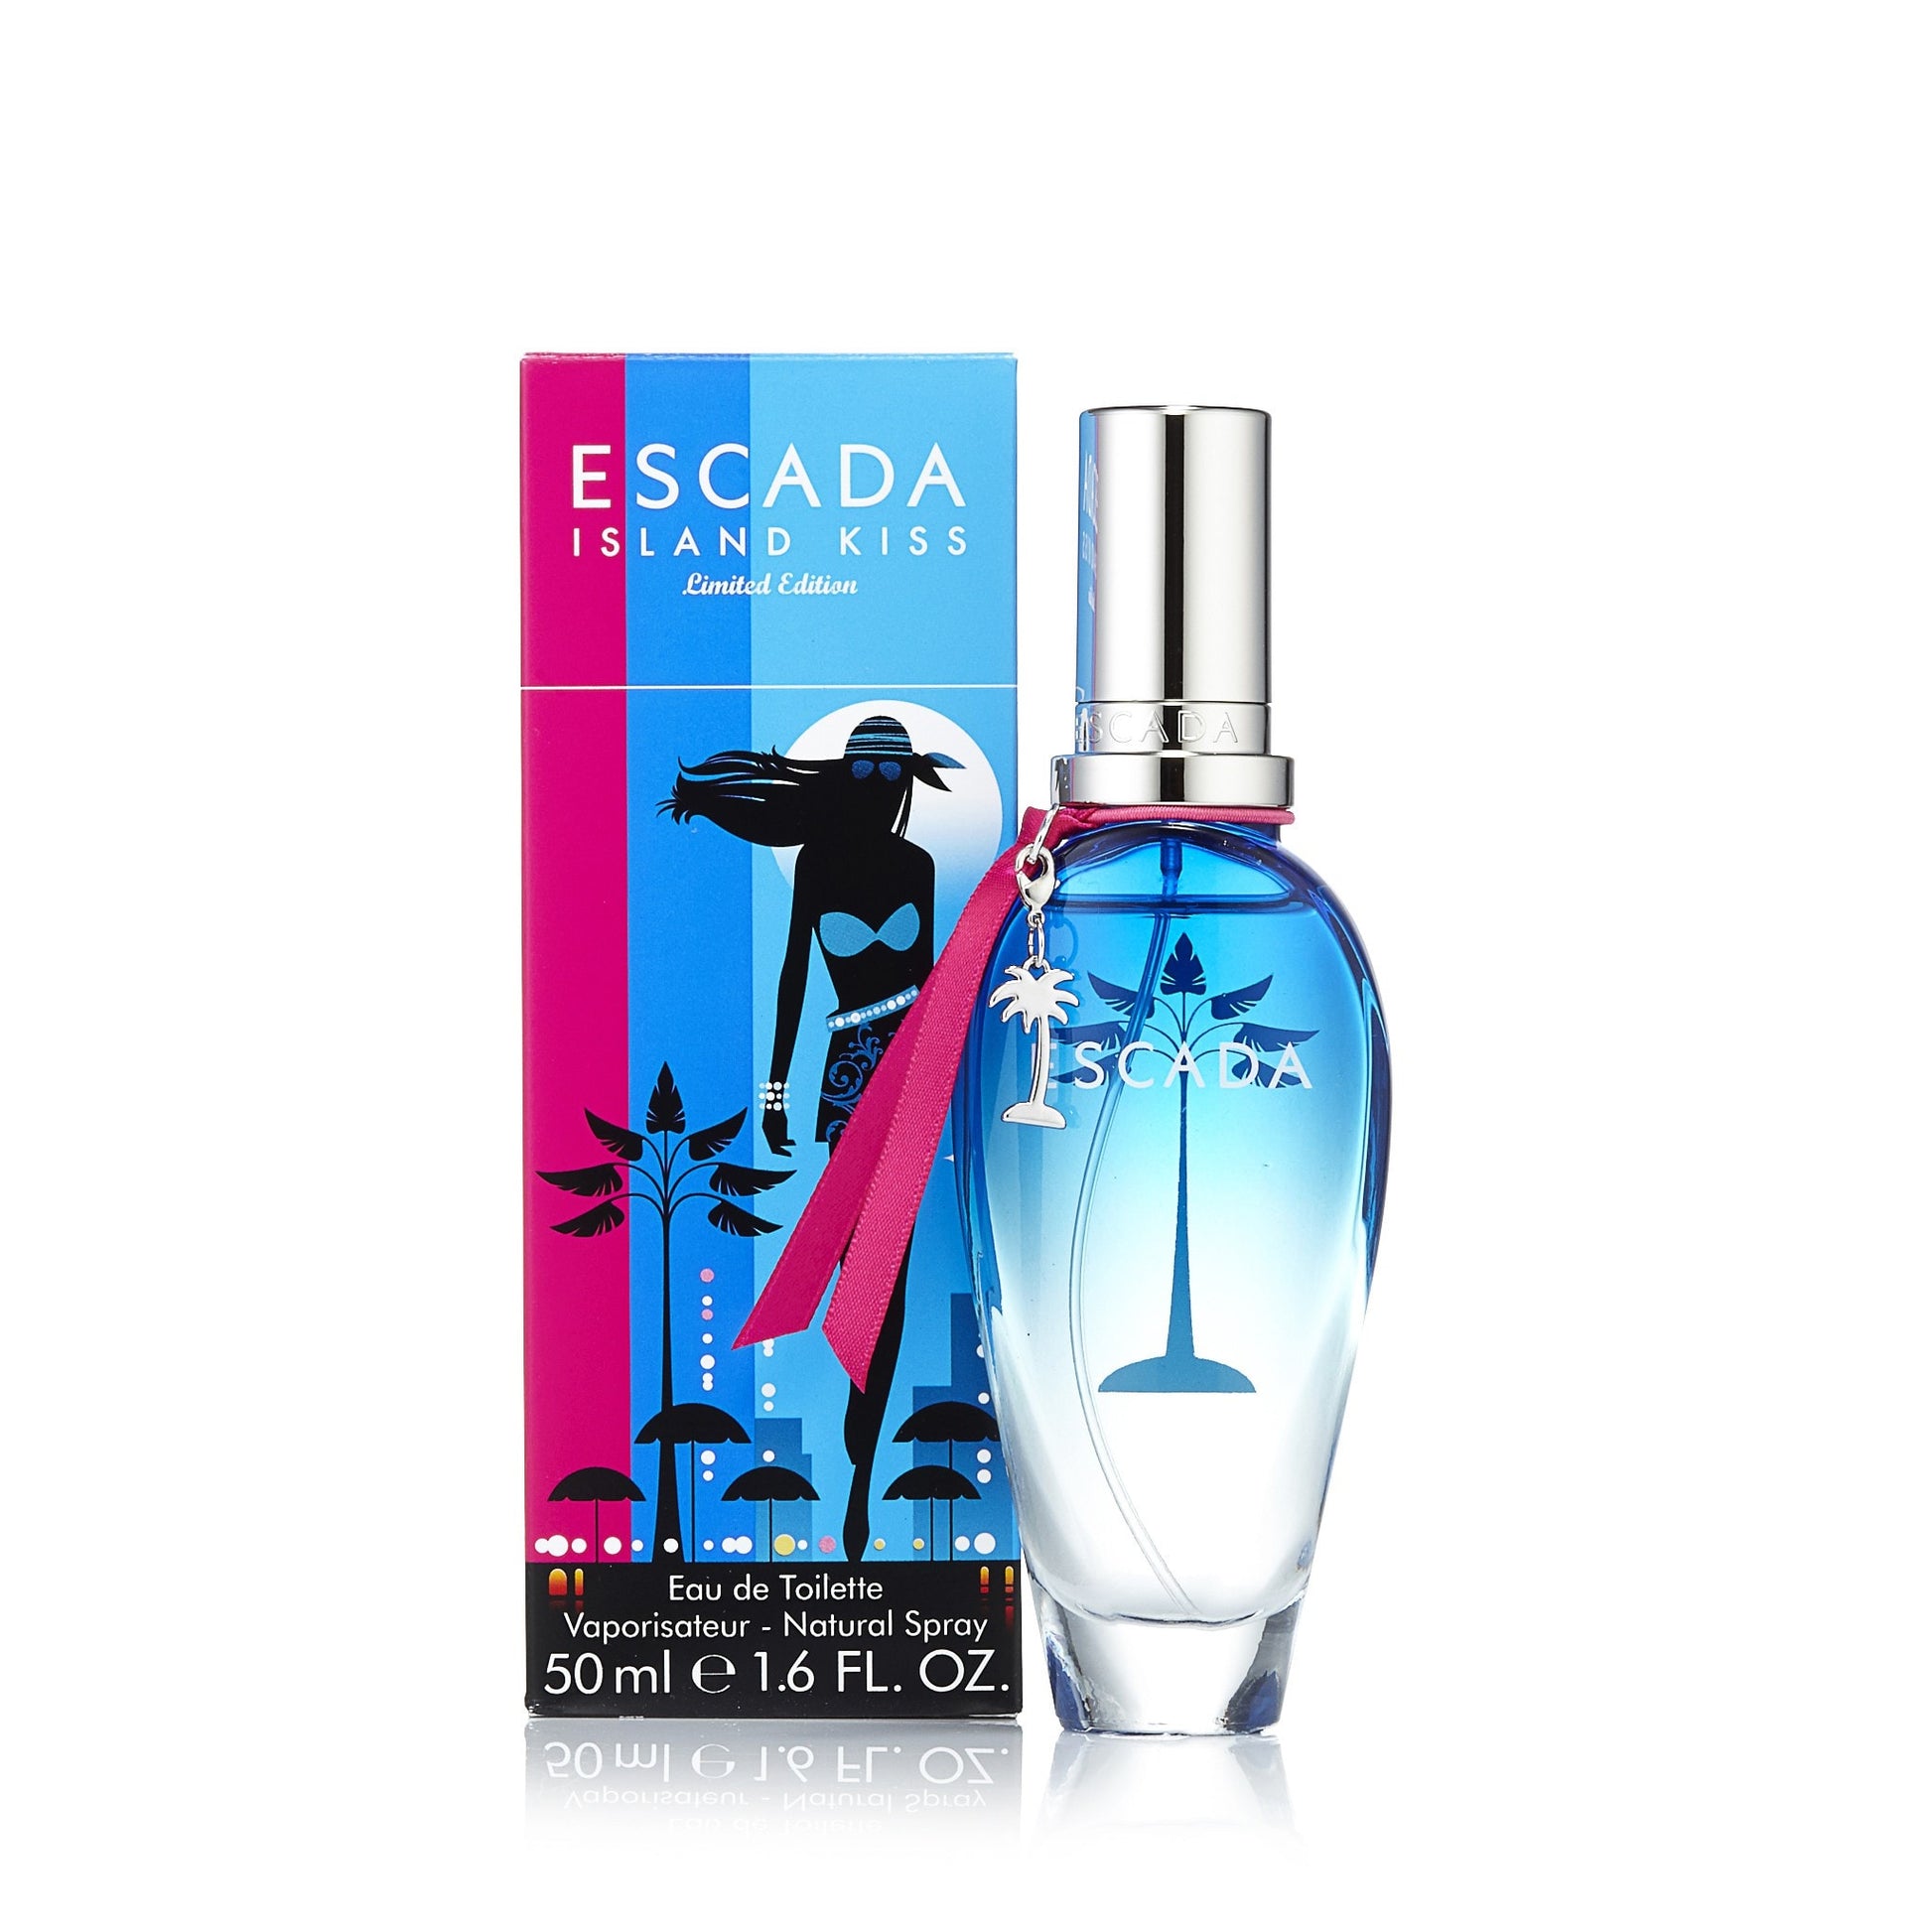 Island Kiss Eau de Toilette Spray for Women by Escada, Product image 3